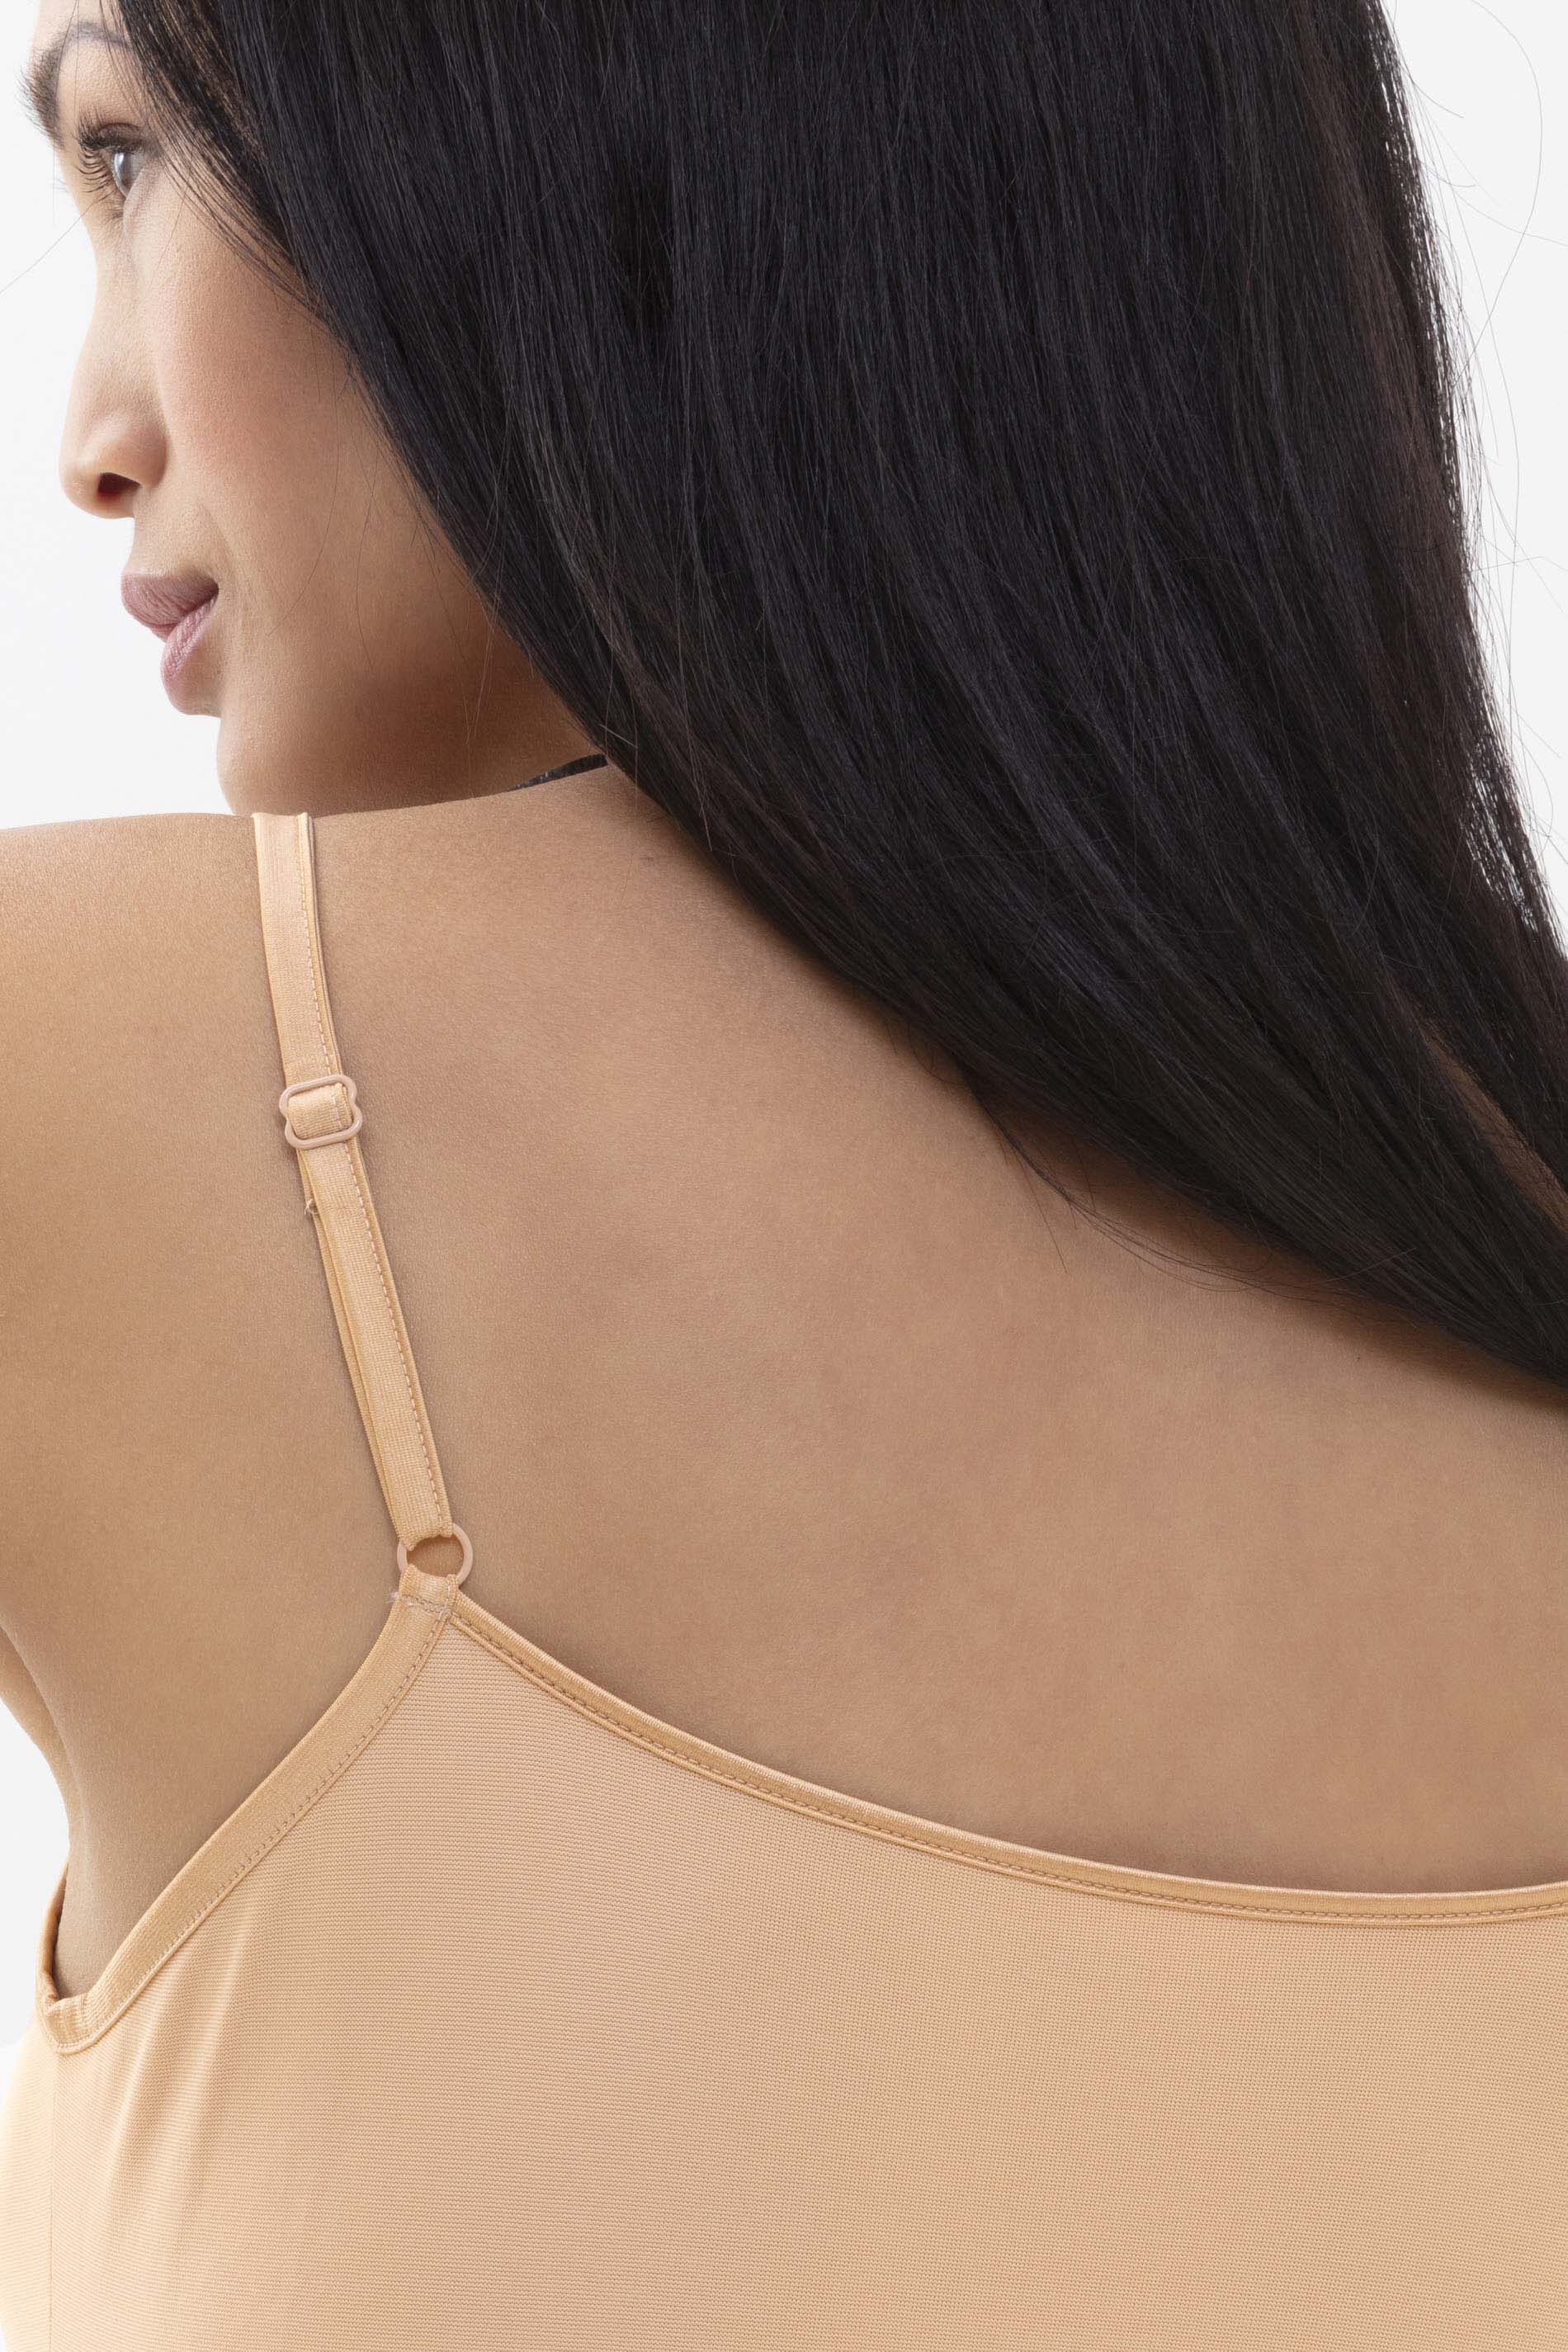 Body-Dress Cream Tan Serie Emotion Detail View 02 | mey®